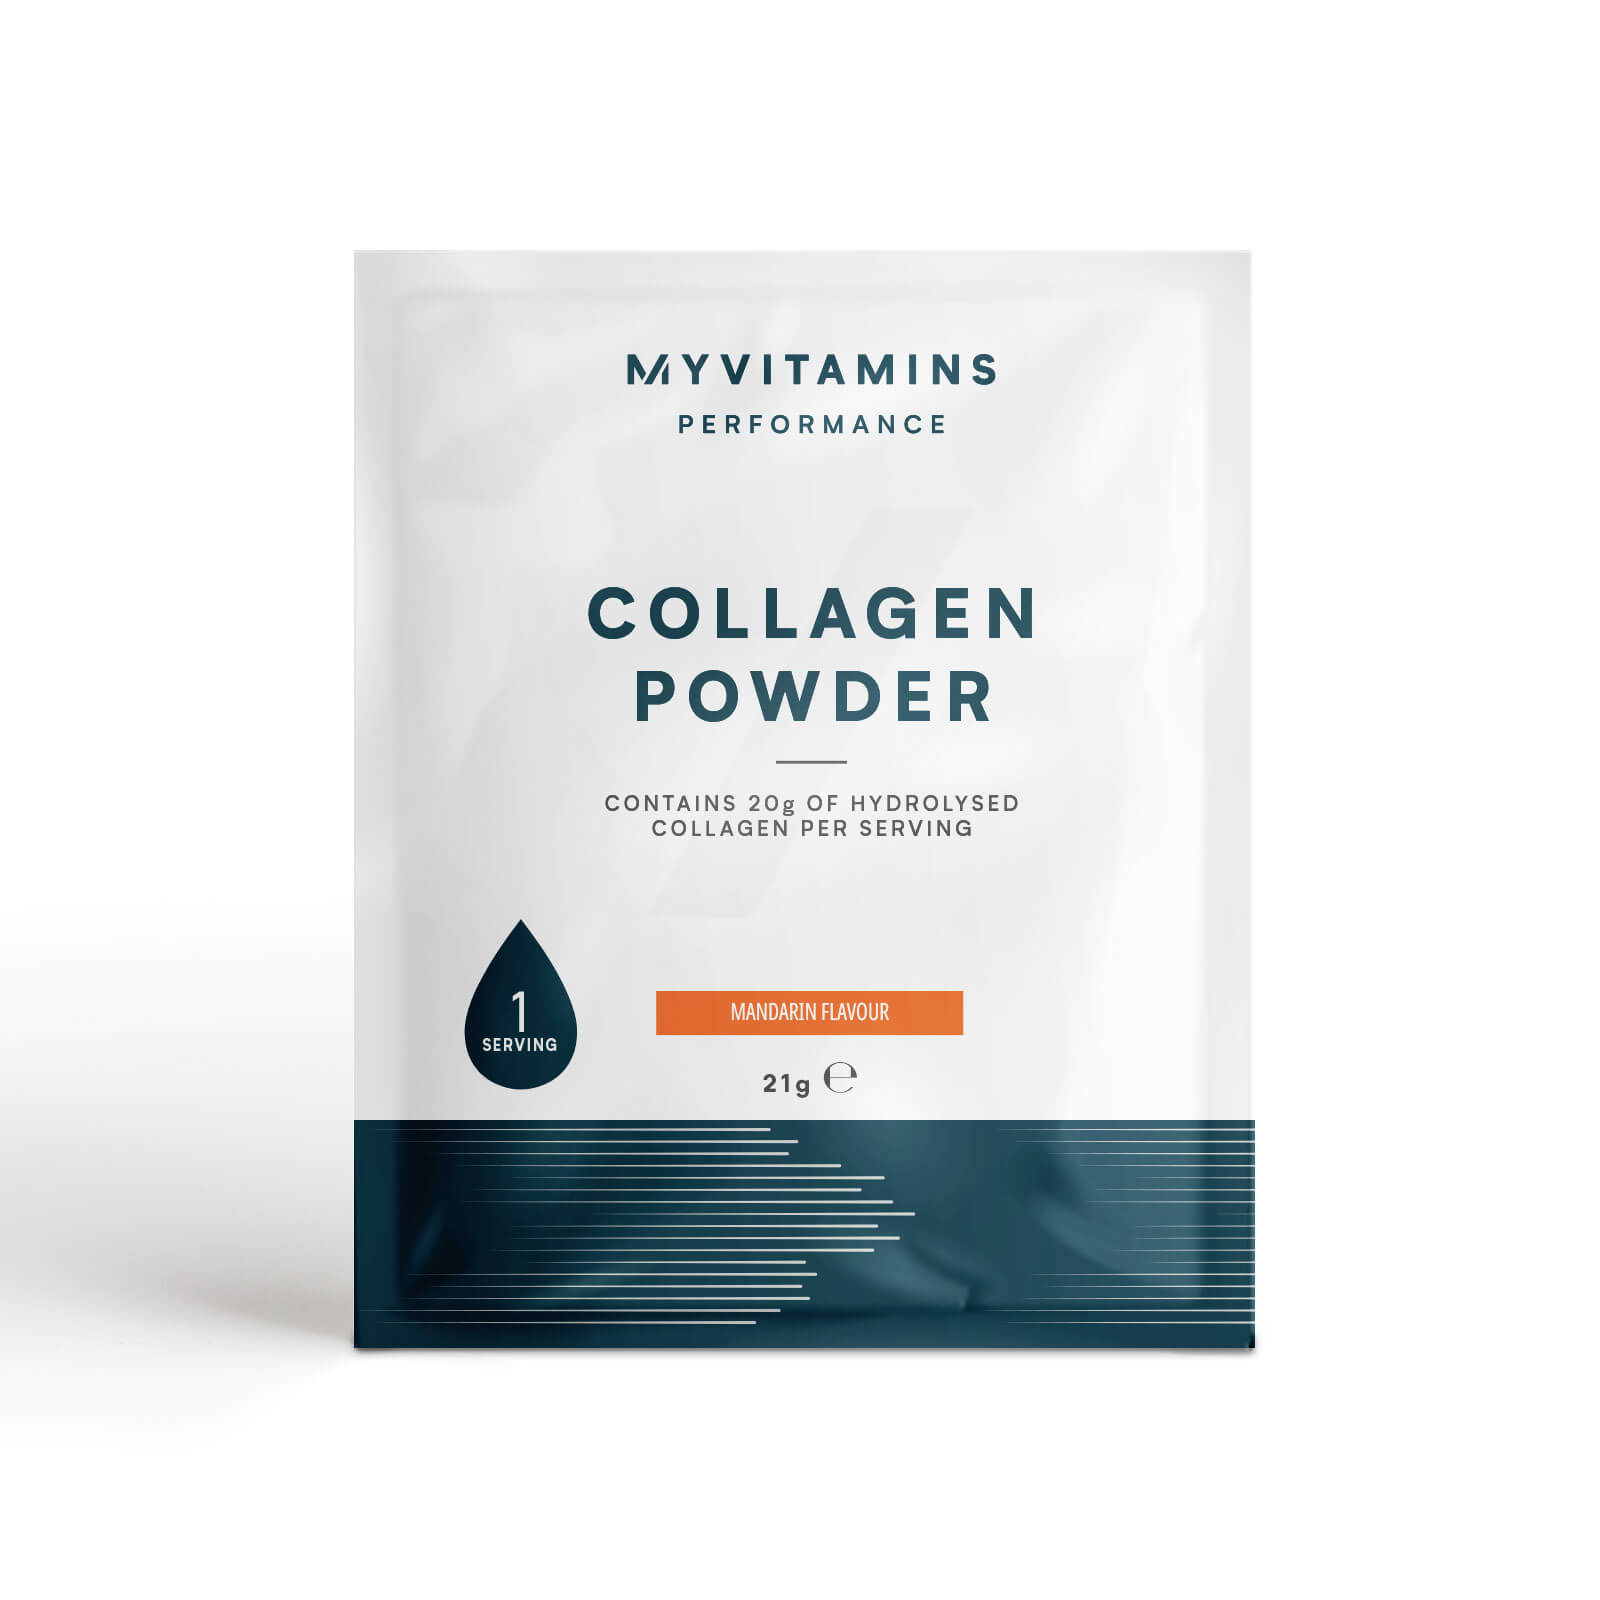 Collagen Powder (Sample) - 1servings - Mandarin